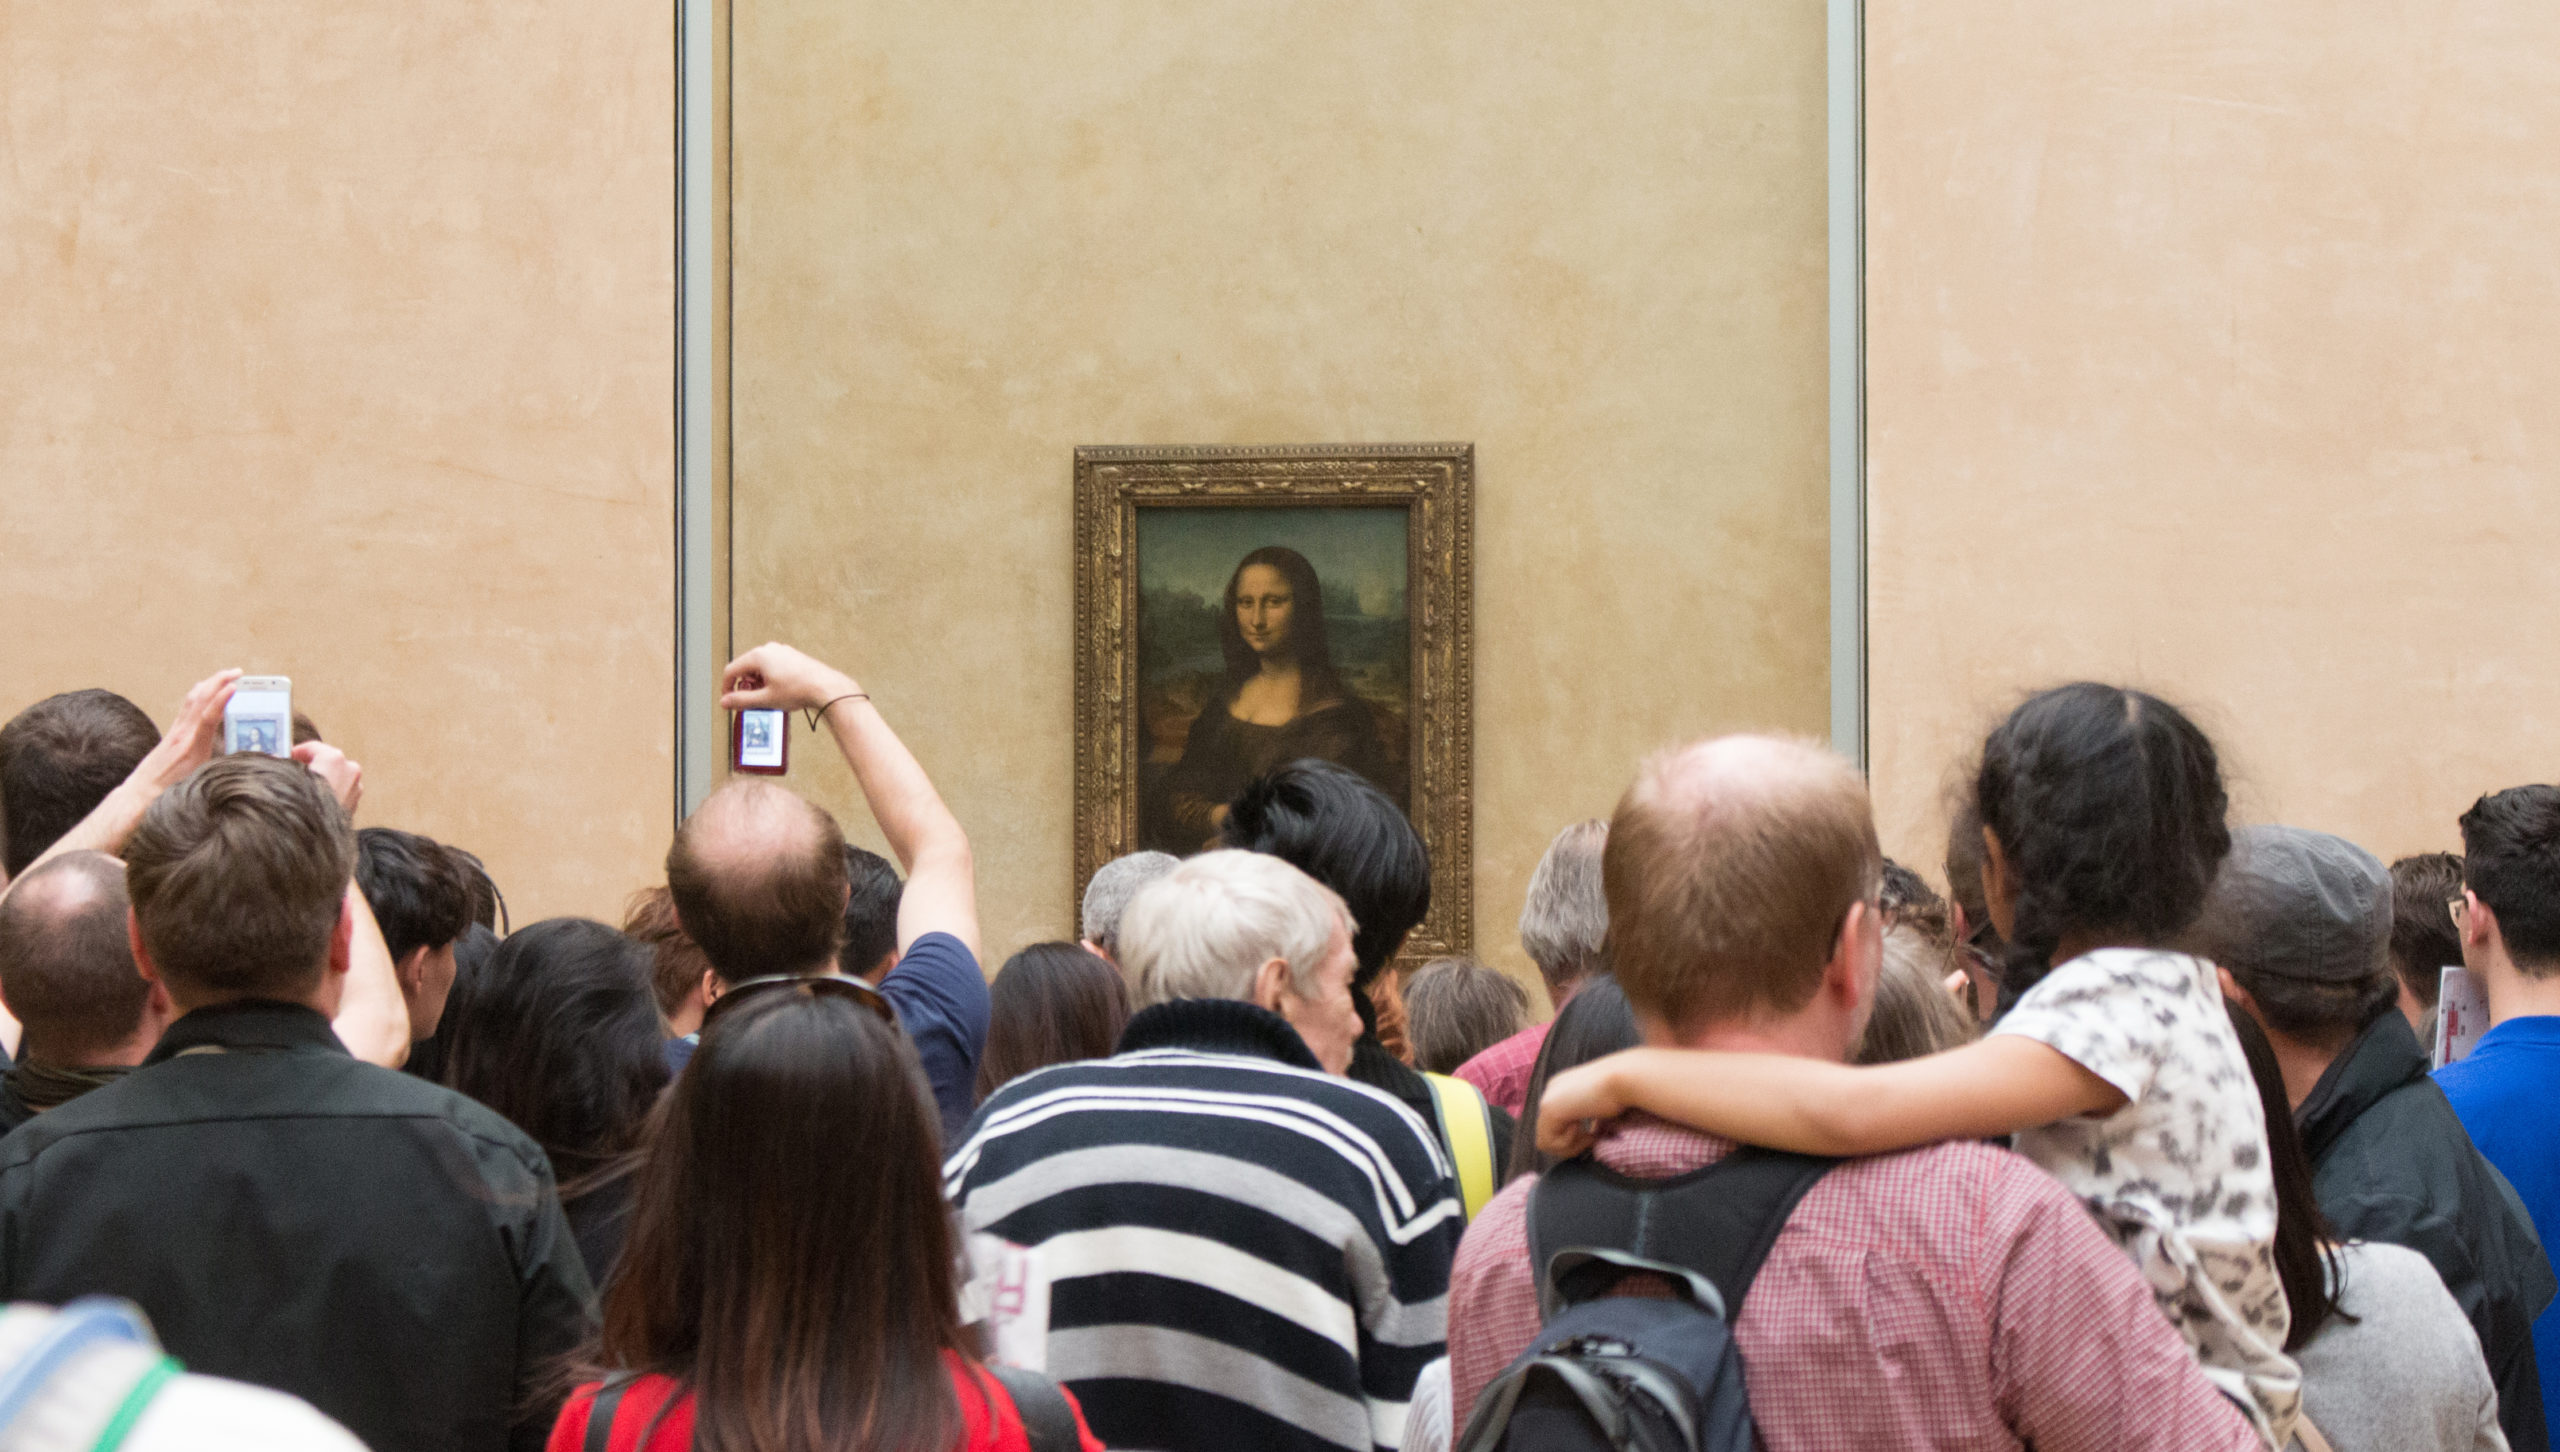 Monalisa Ka X Video Monalisa X Video - Mona Lisa (article) | Leonardo da Vinci | Khan Academy